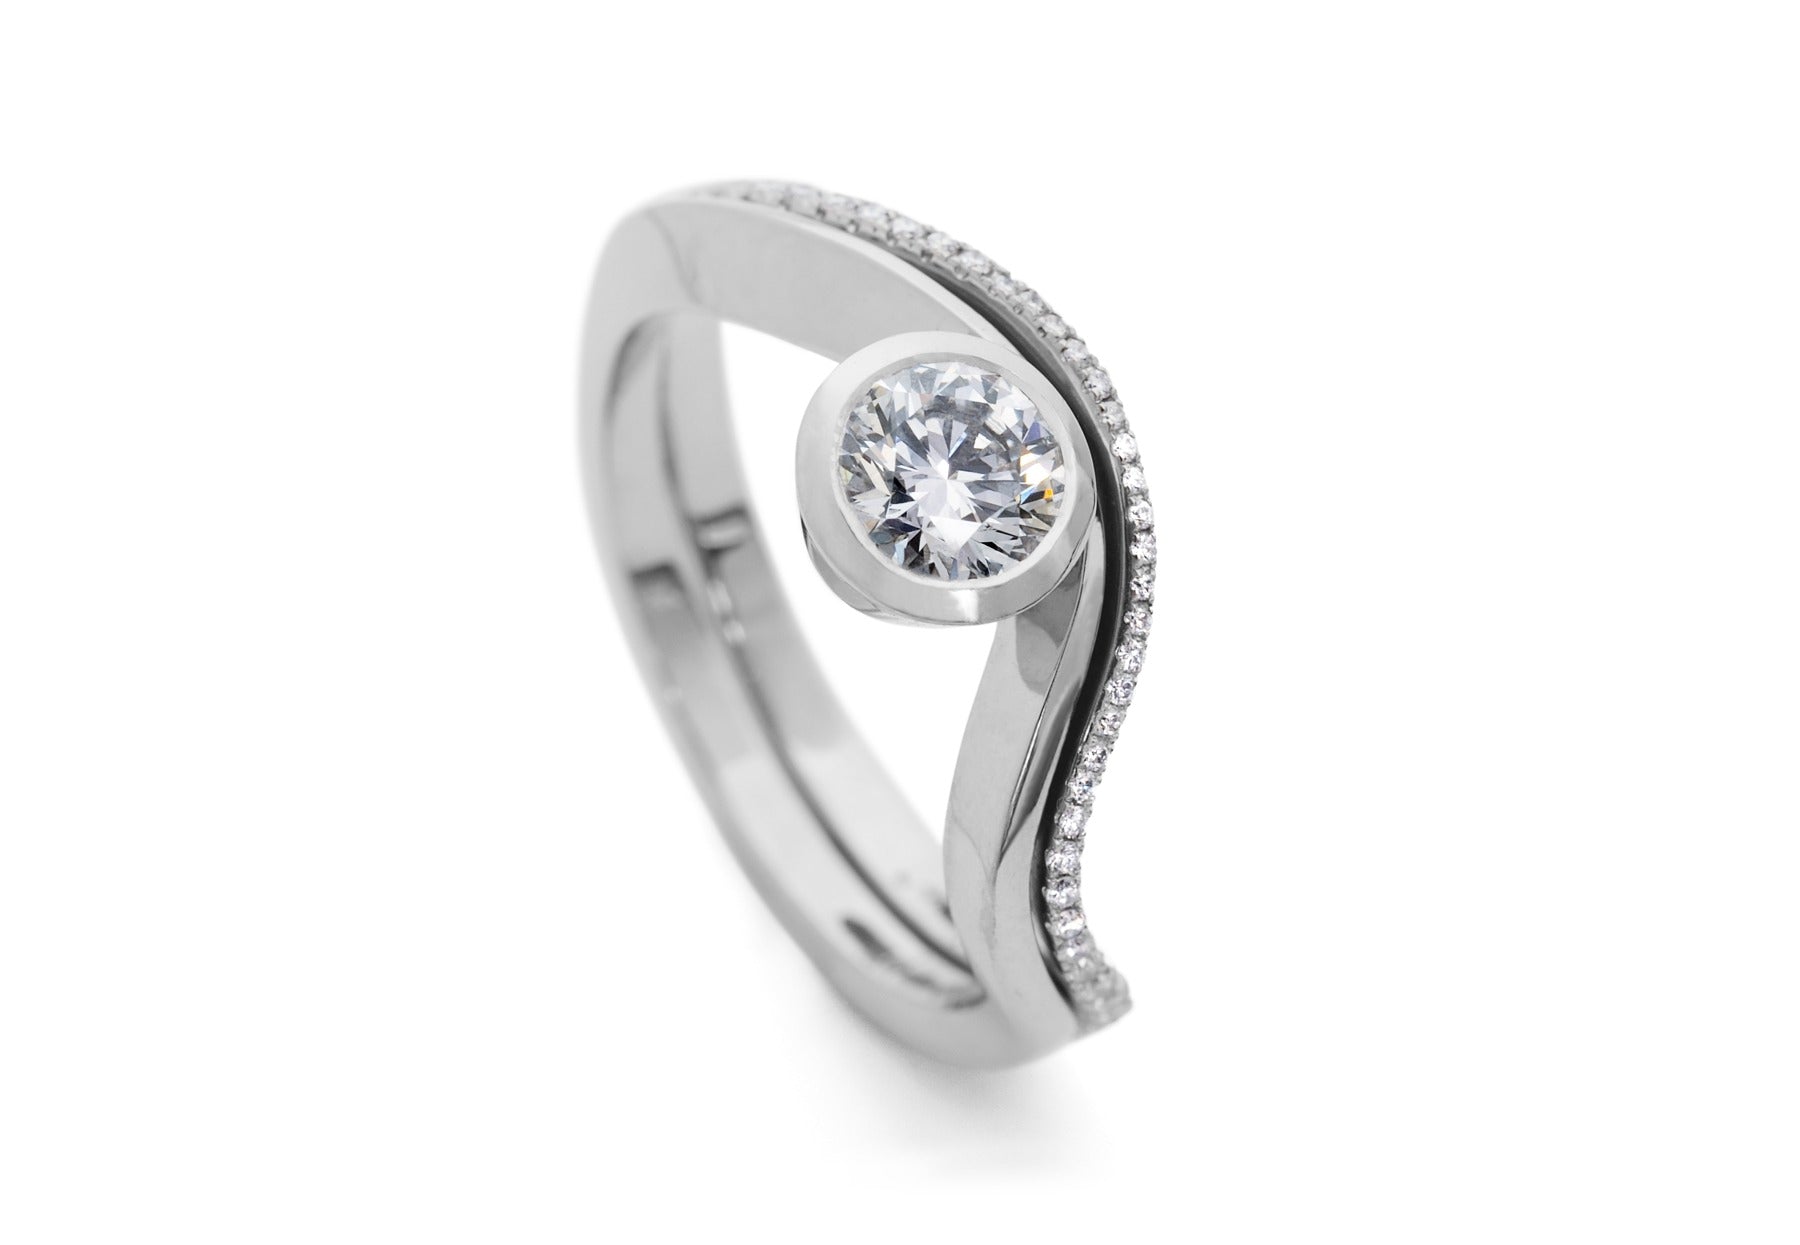 Balance white diamond platinum engagement ring and white diamond pave set fitted wedding ring